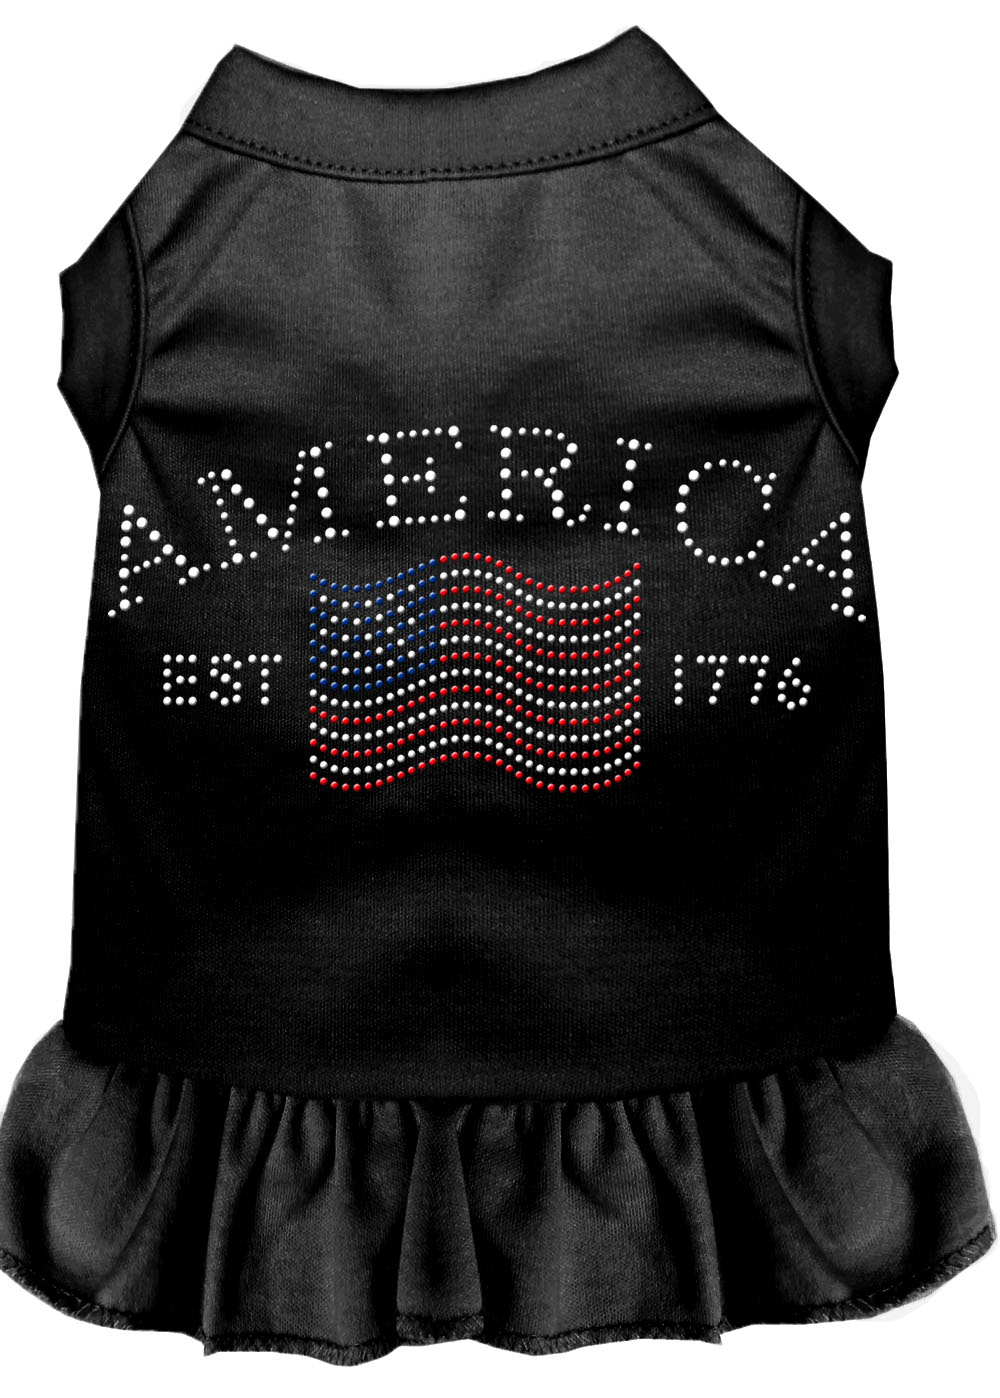 Classic America Rhinestone Dress Black Lg